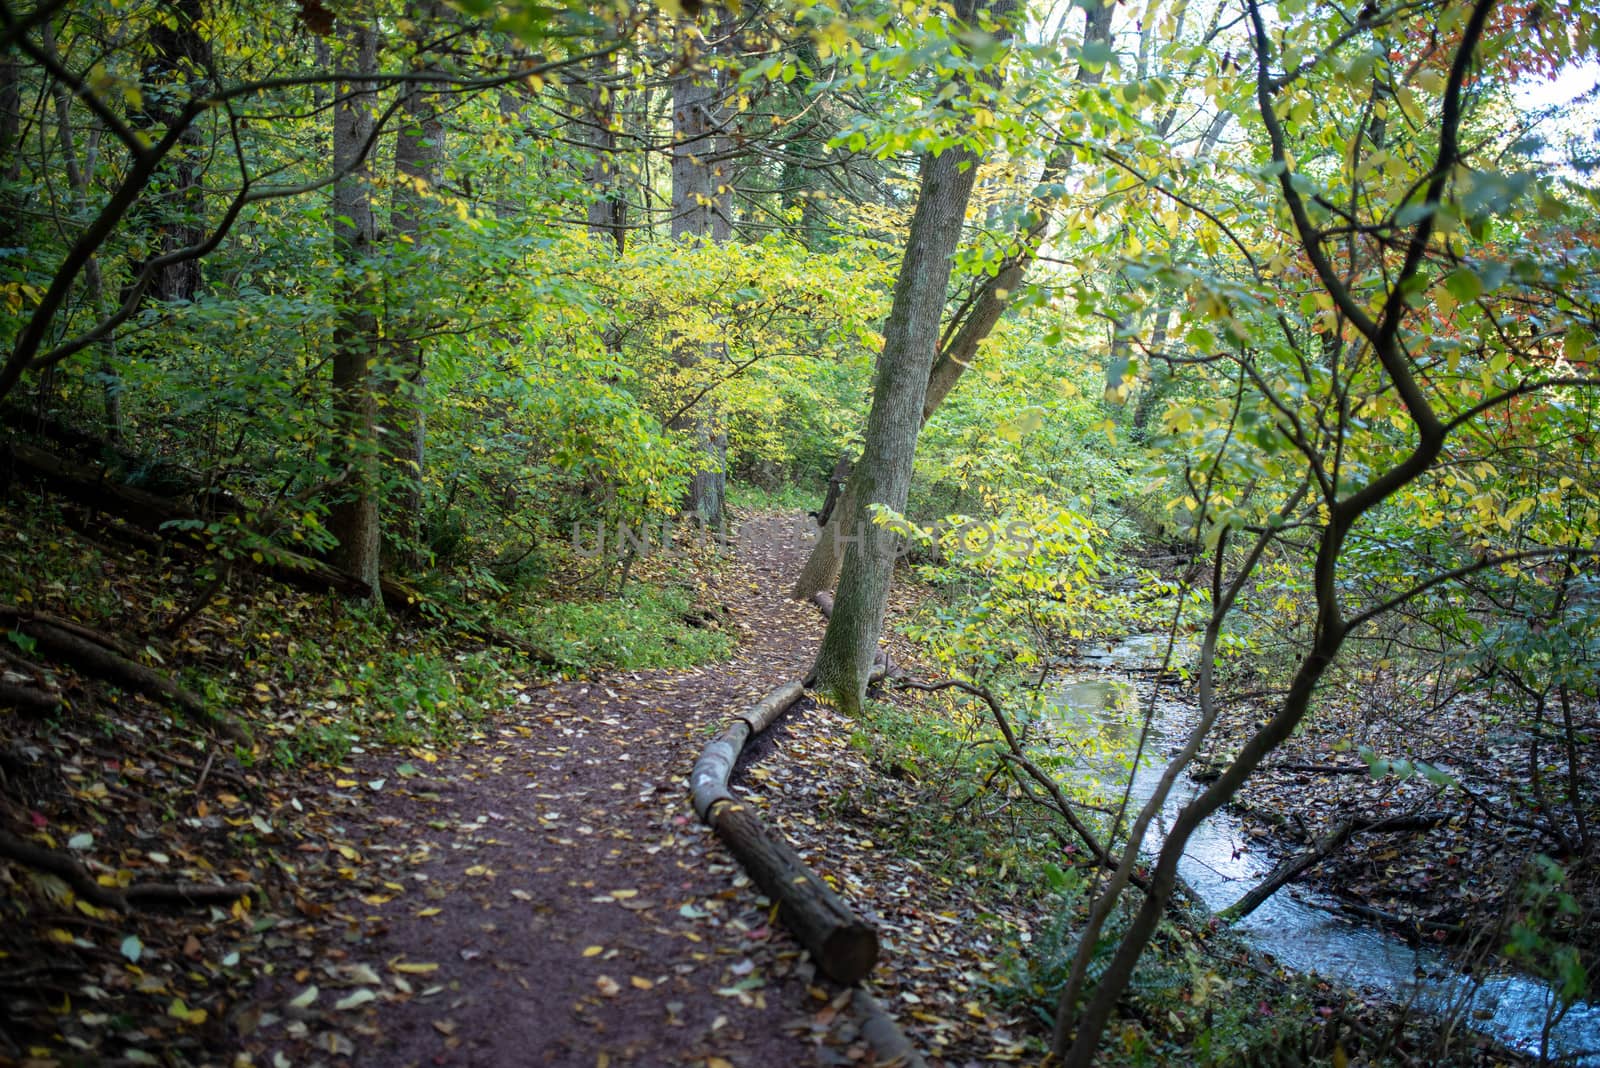 Yellow and green leaves, along an idyllic Pennsylvania hiking trail. A creek reflecting a blue sky runs alongside.